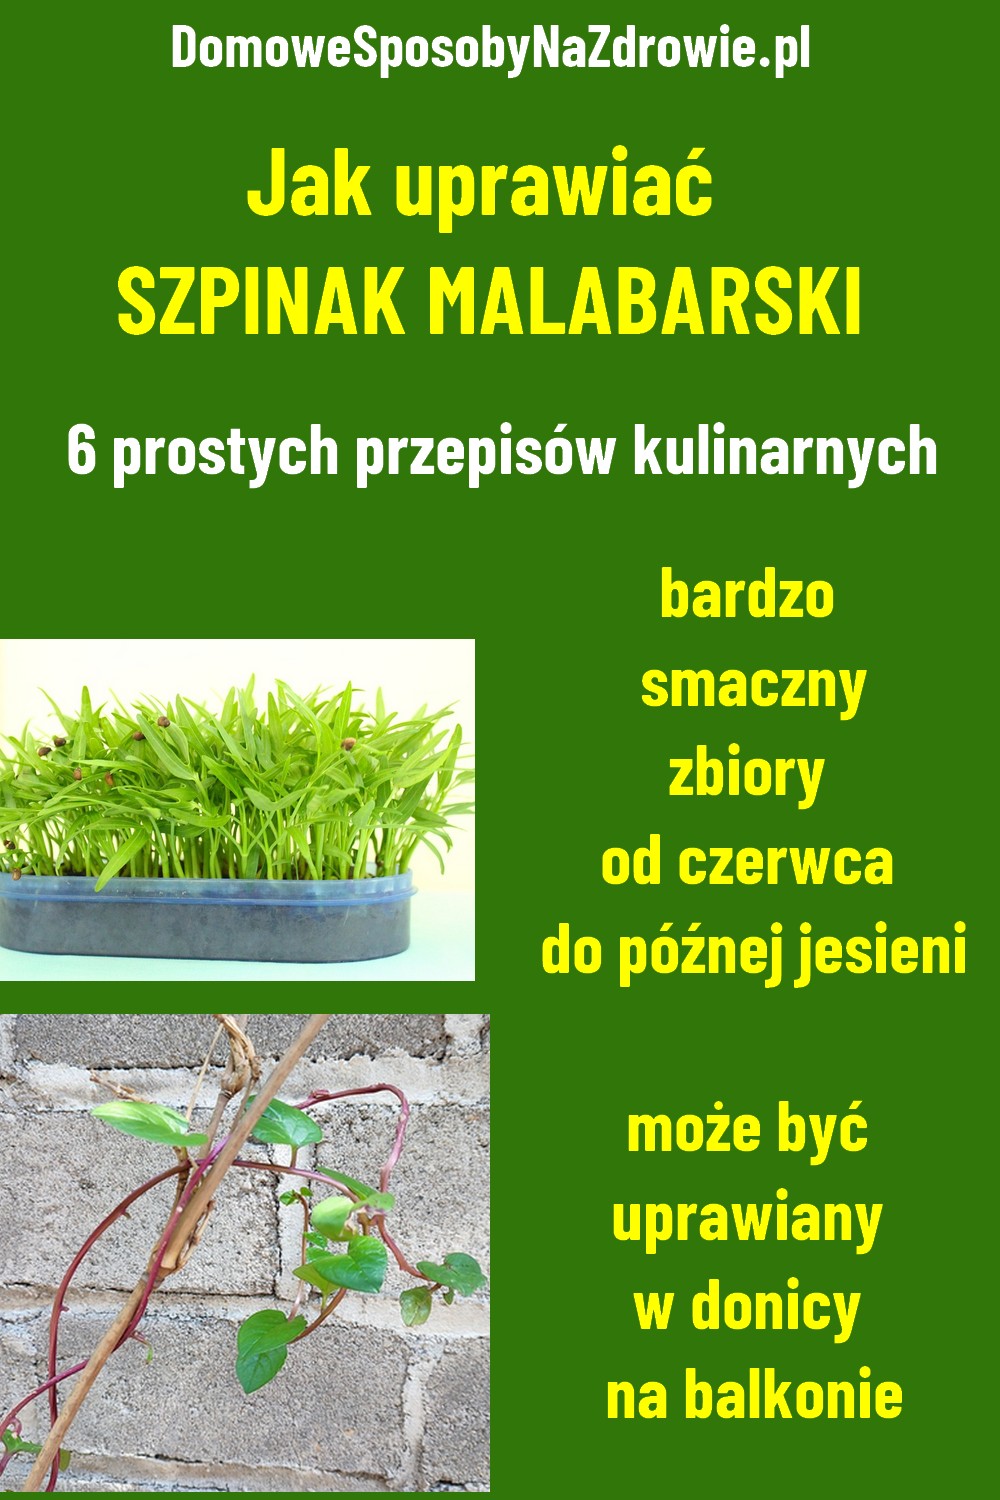 szpinak malabarski - uprawa - przepisy kulinarne